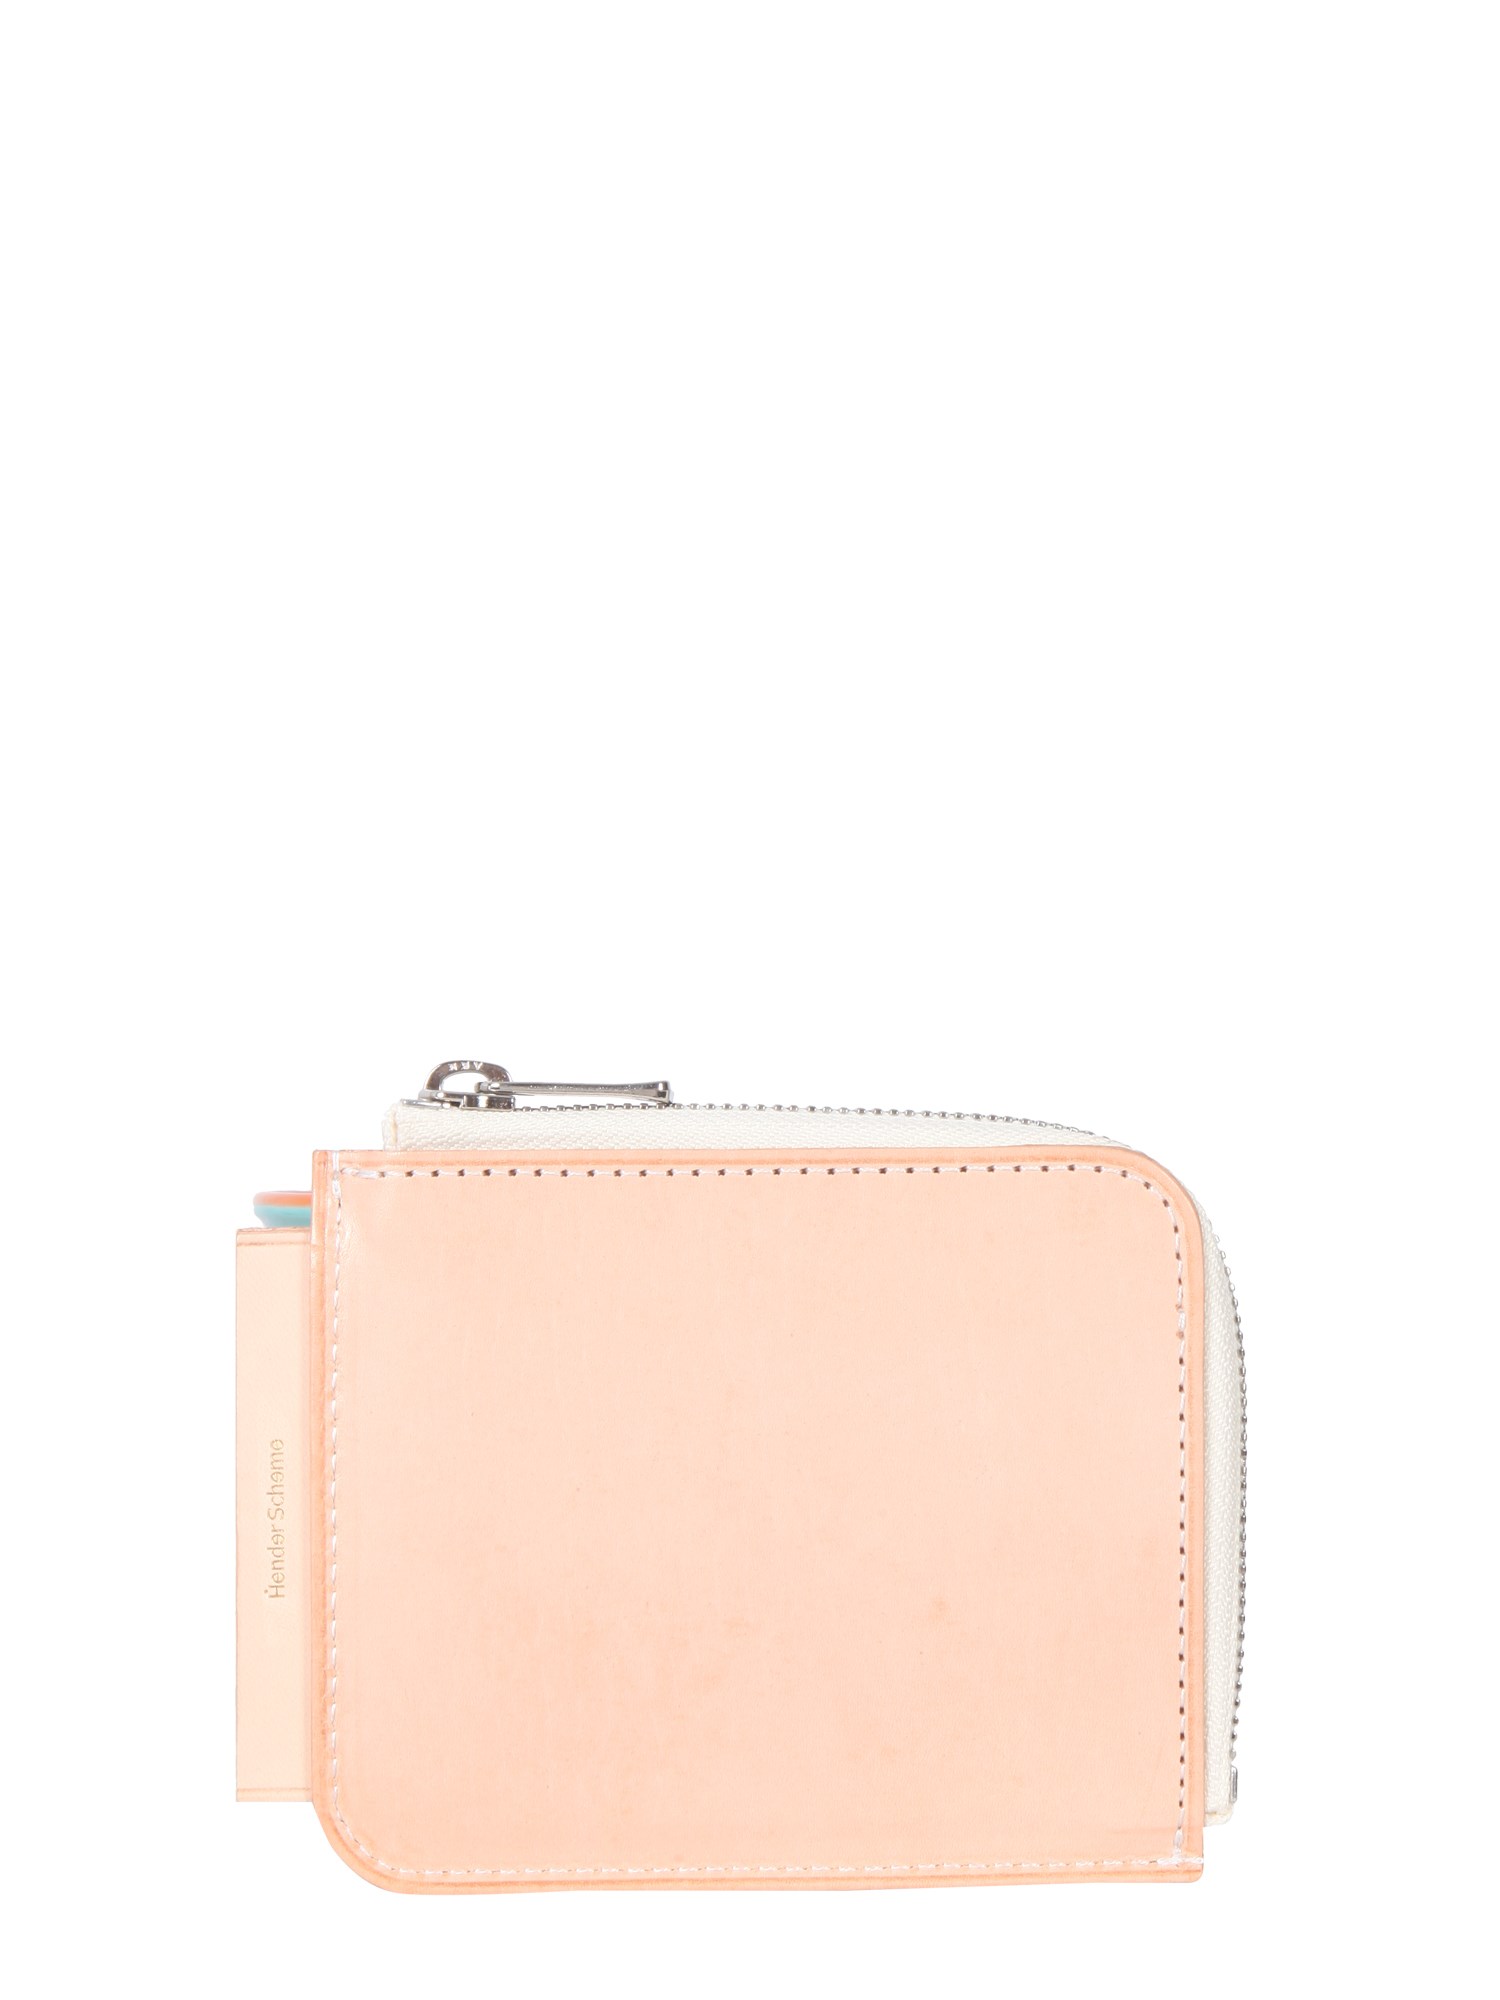 hender scheme wallet with zip